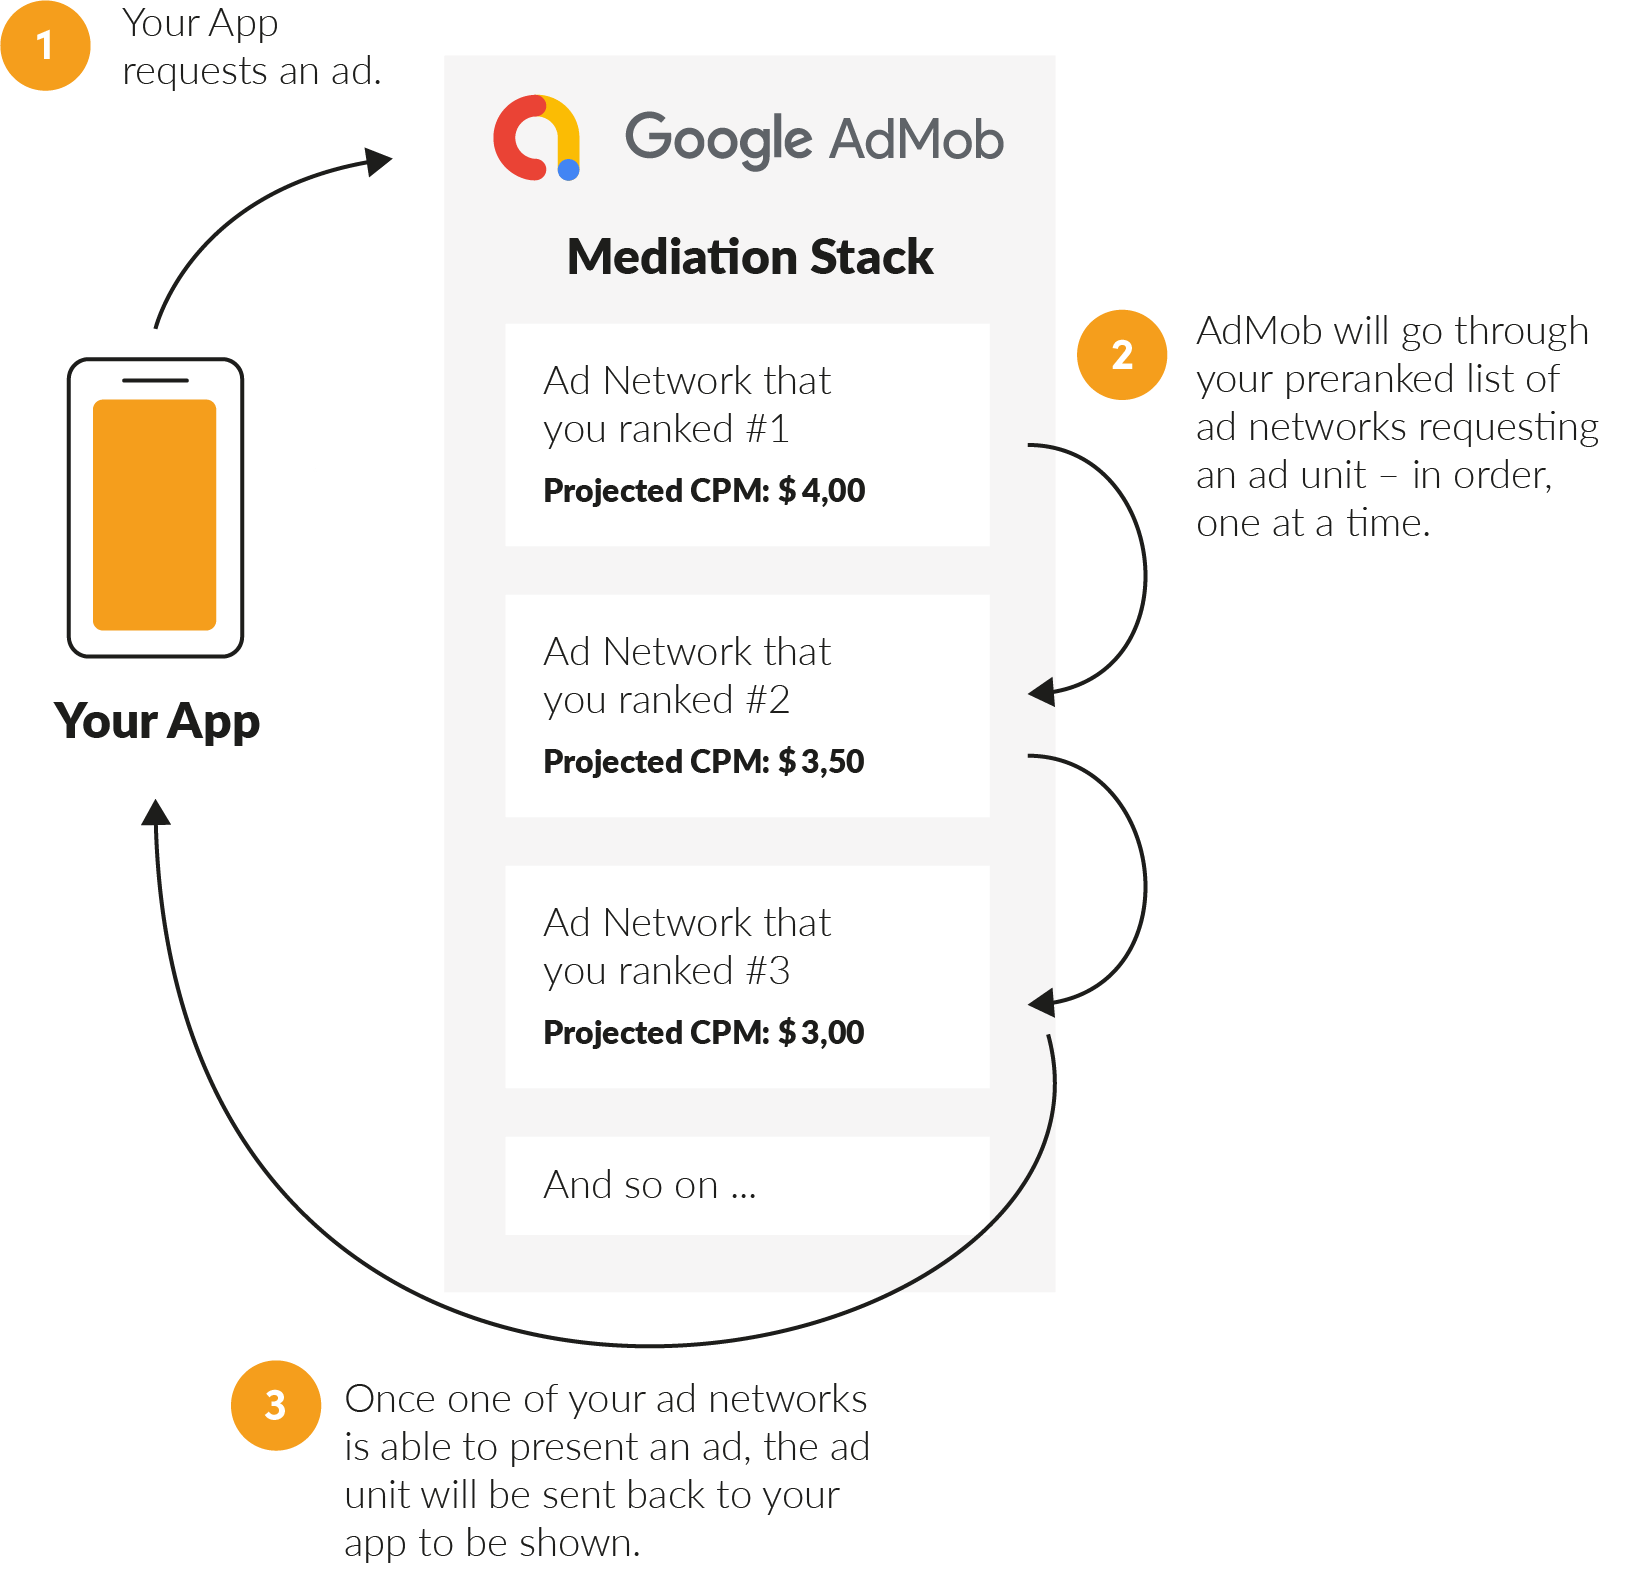 Google AdMob Mediation Stack